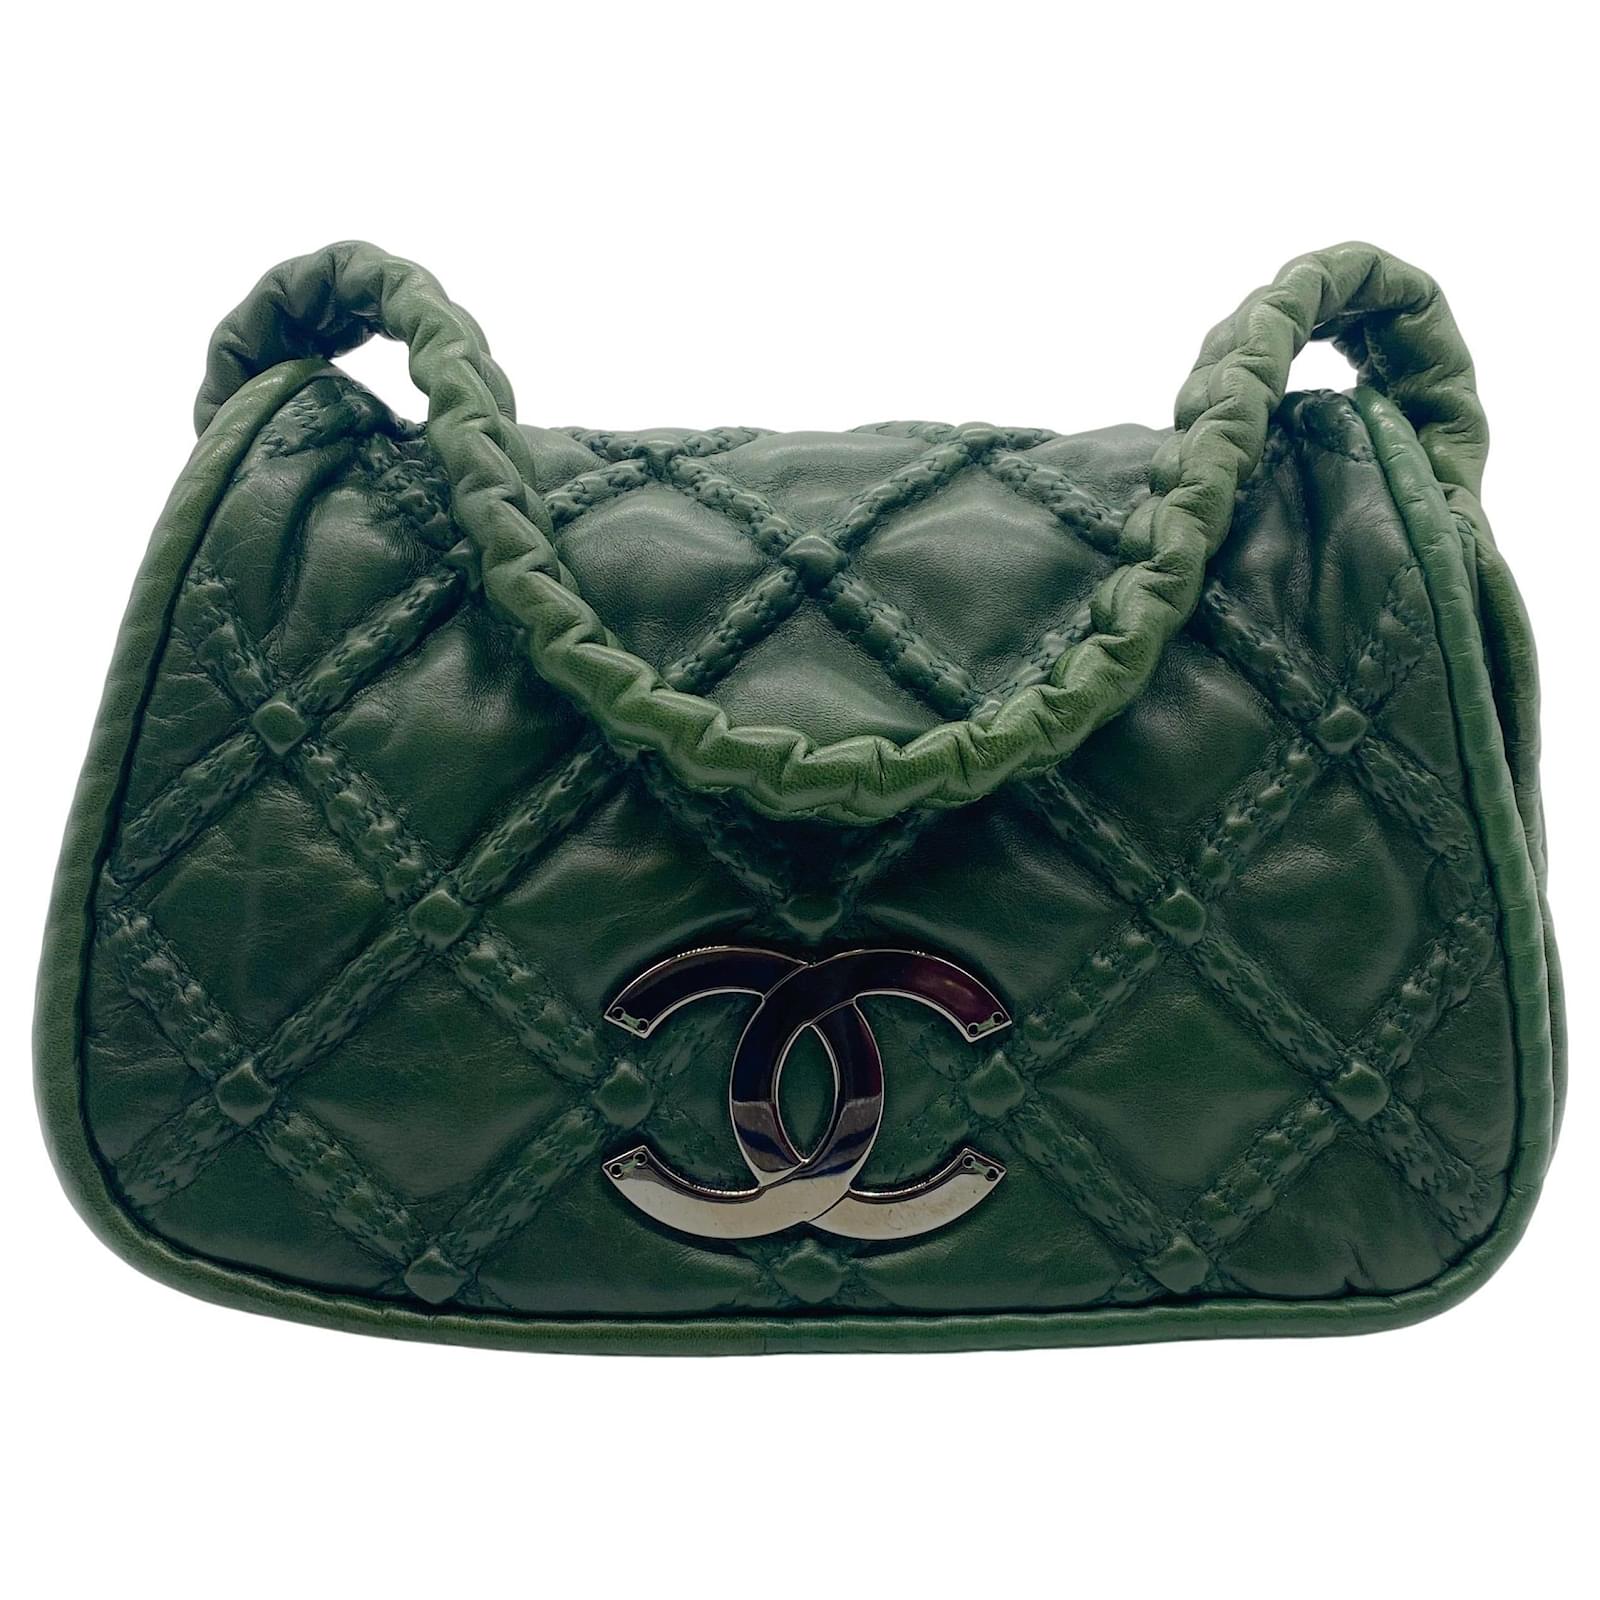 Chanel Hidden Chain Handle Green Leather Shoulder Bag